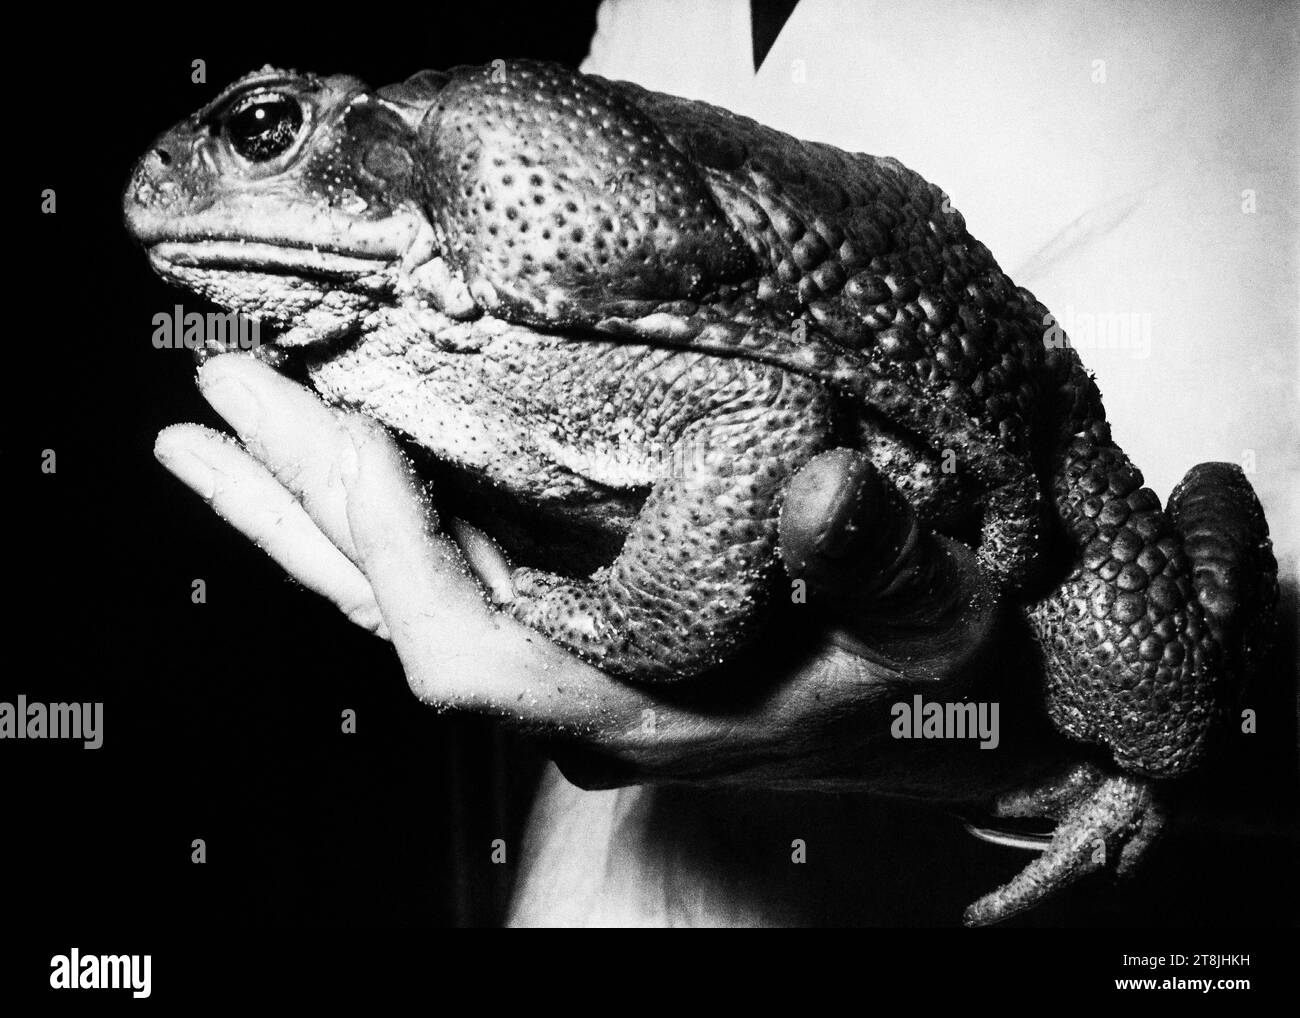 Bufo marinus 'Cane toad' - Psychoactive Toad Stock Photo